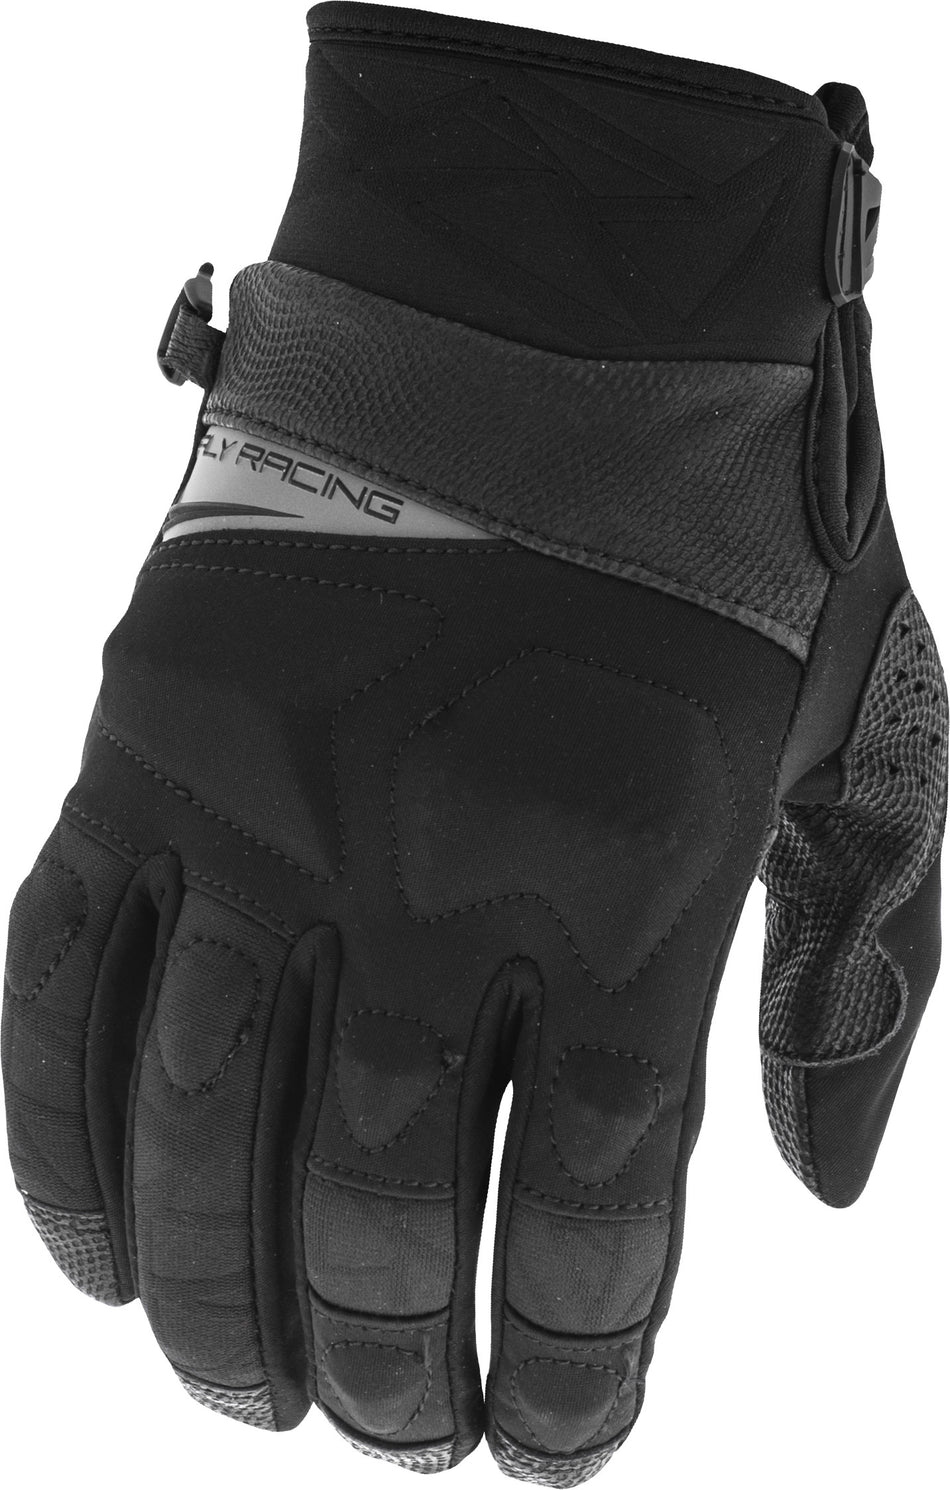 FLY RACING Boundary Gloves Black Sz 08 371-03008